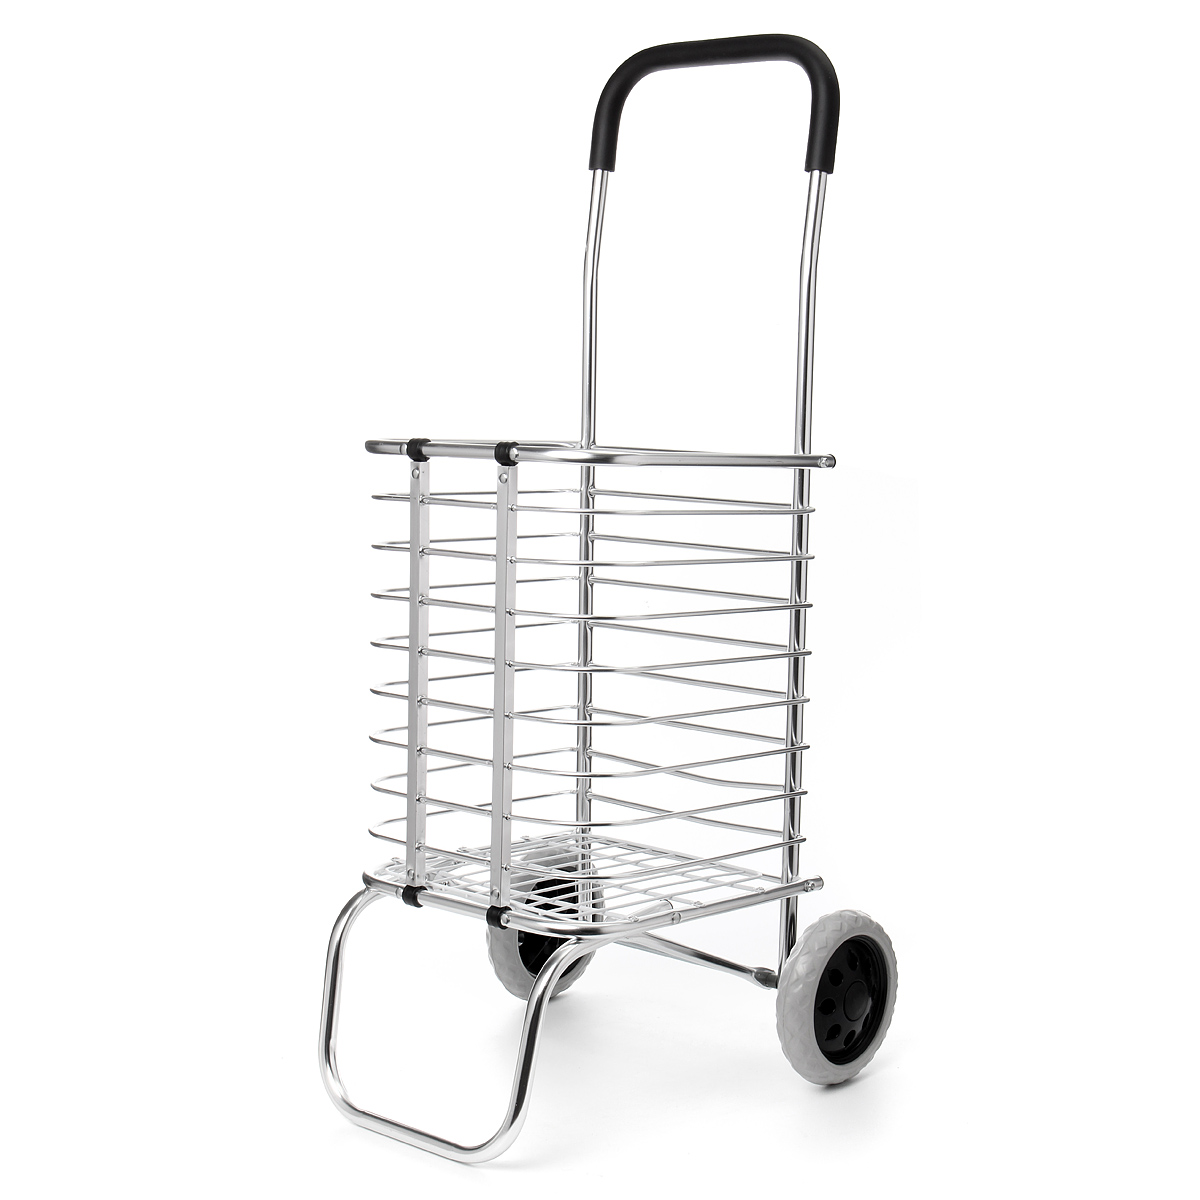 Folding-Portable-Shopping-Basket-Cart-Trolley-Trailer-Two-Wheels-Aluminum-Alloy-1395553